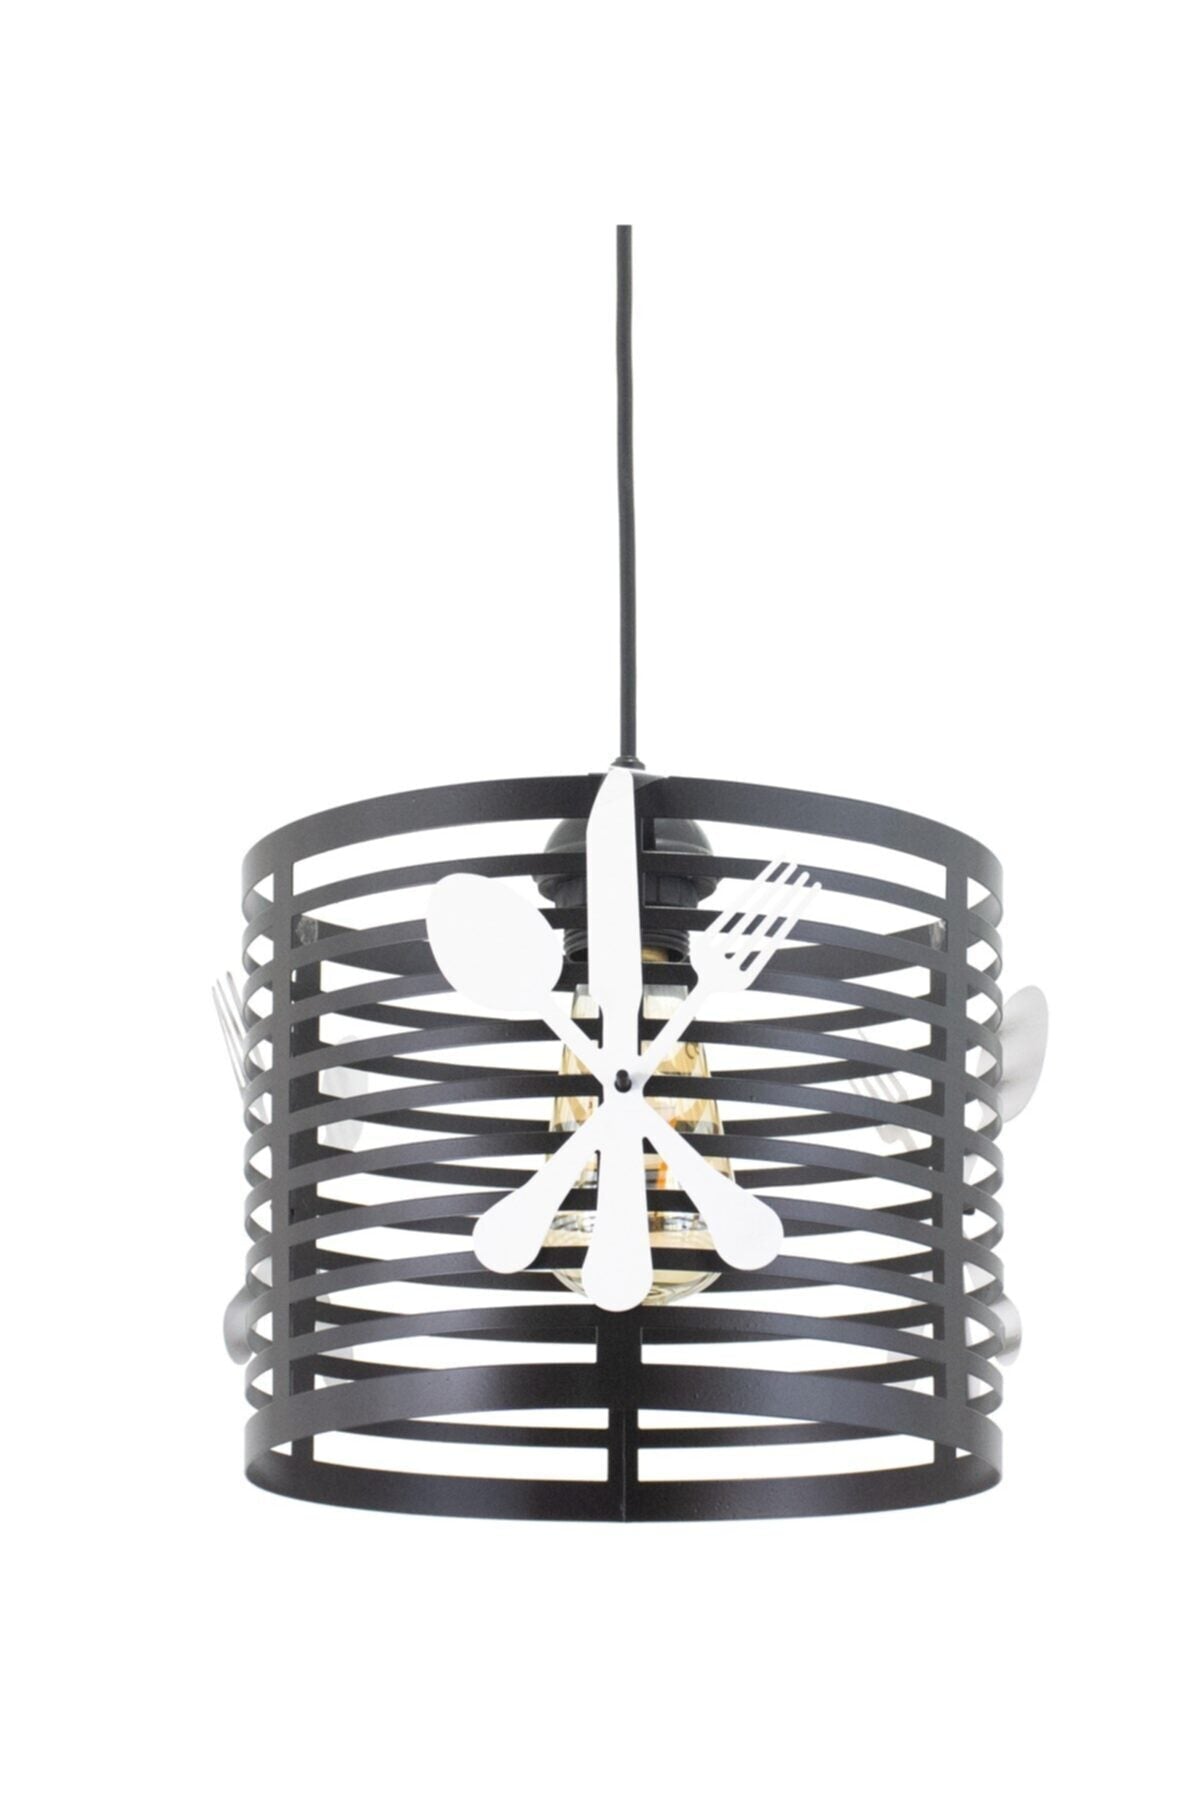 Black fork spoon knife model modern pendant chandelier